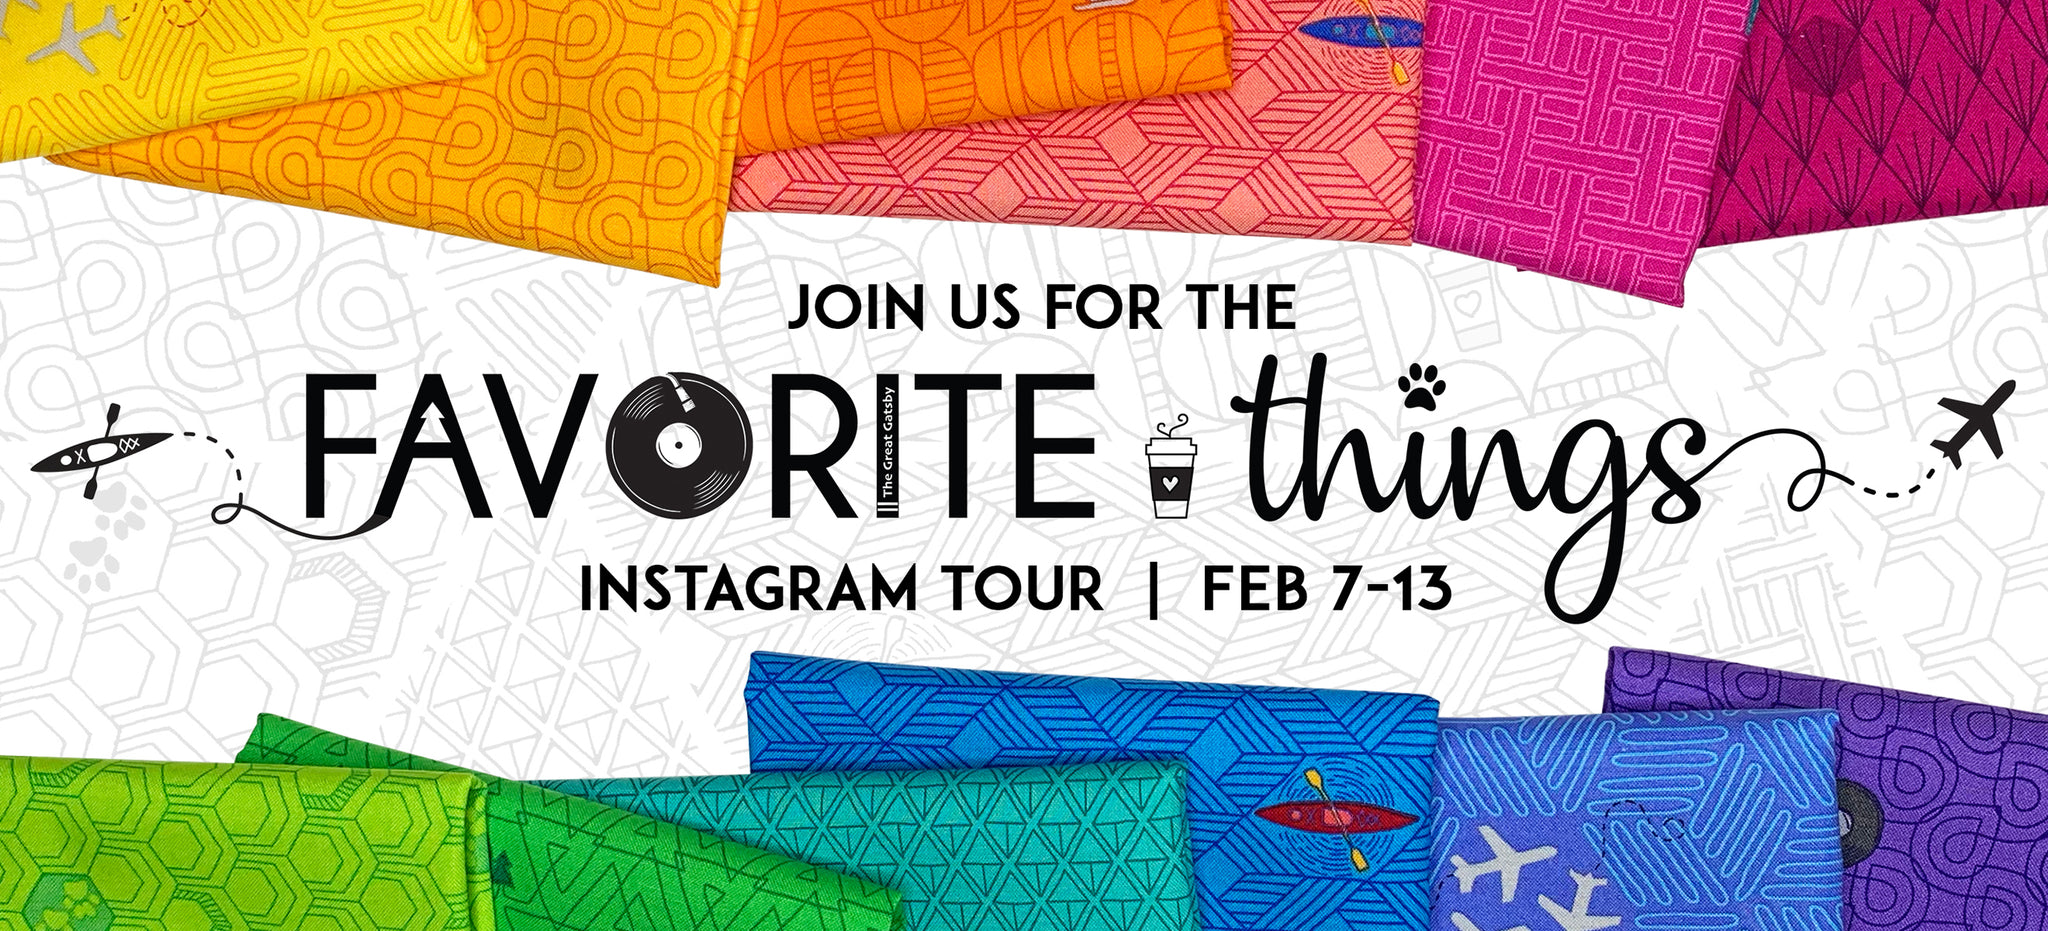 Favorite Things Fabric Instagram Tour